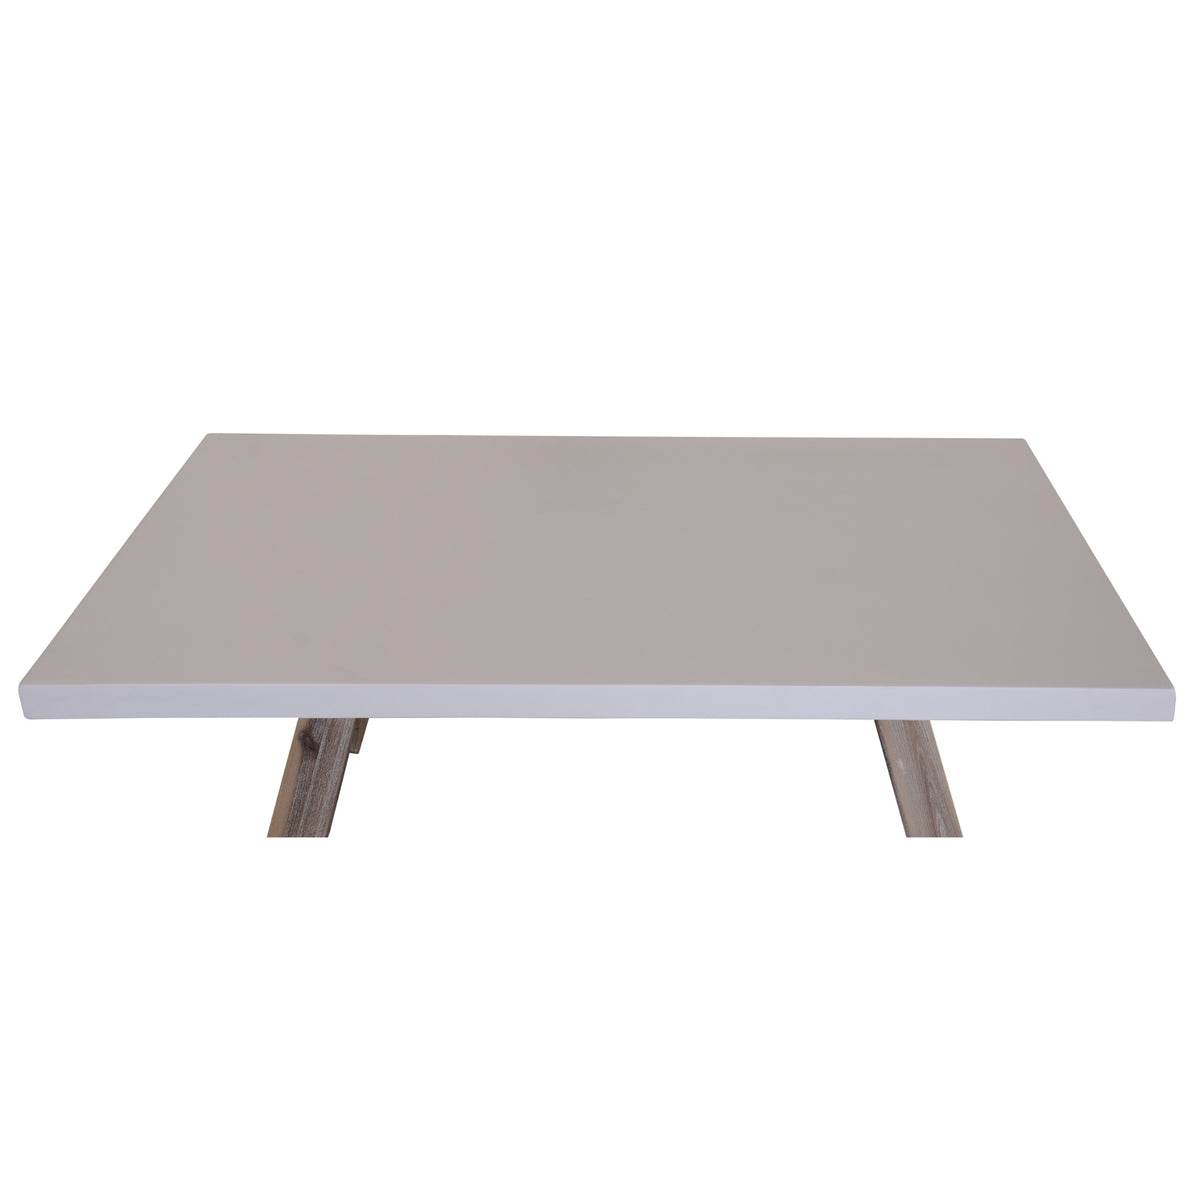 Stony Coffee Table with Concrete Top White 120cm - Rectangular